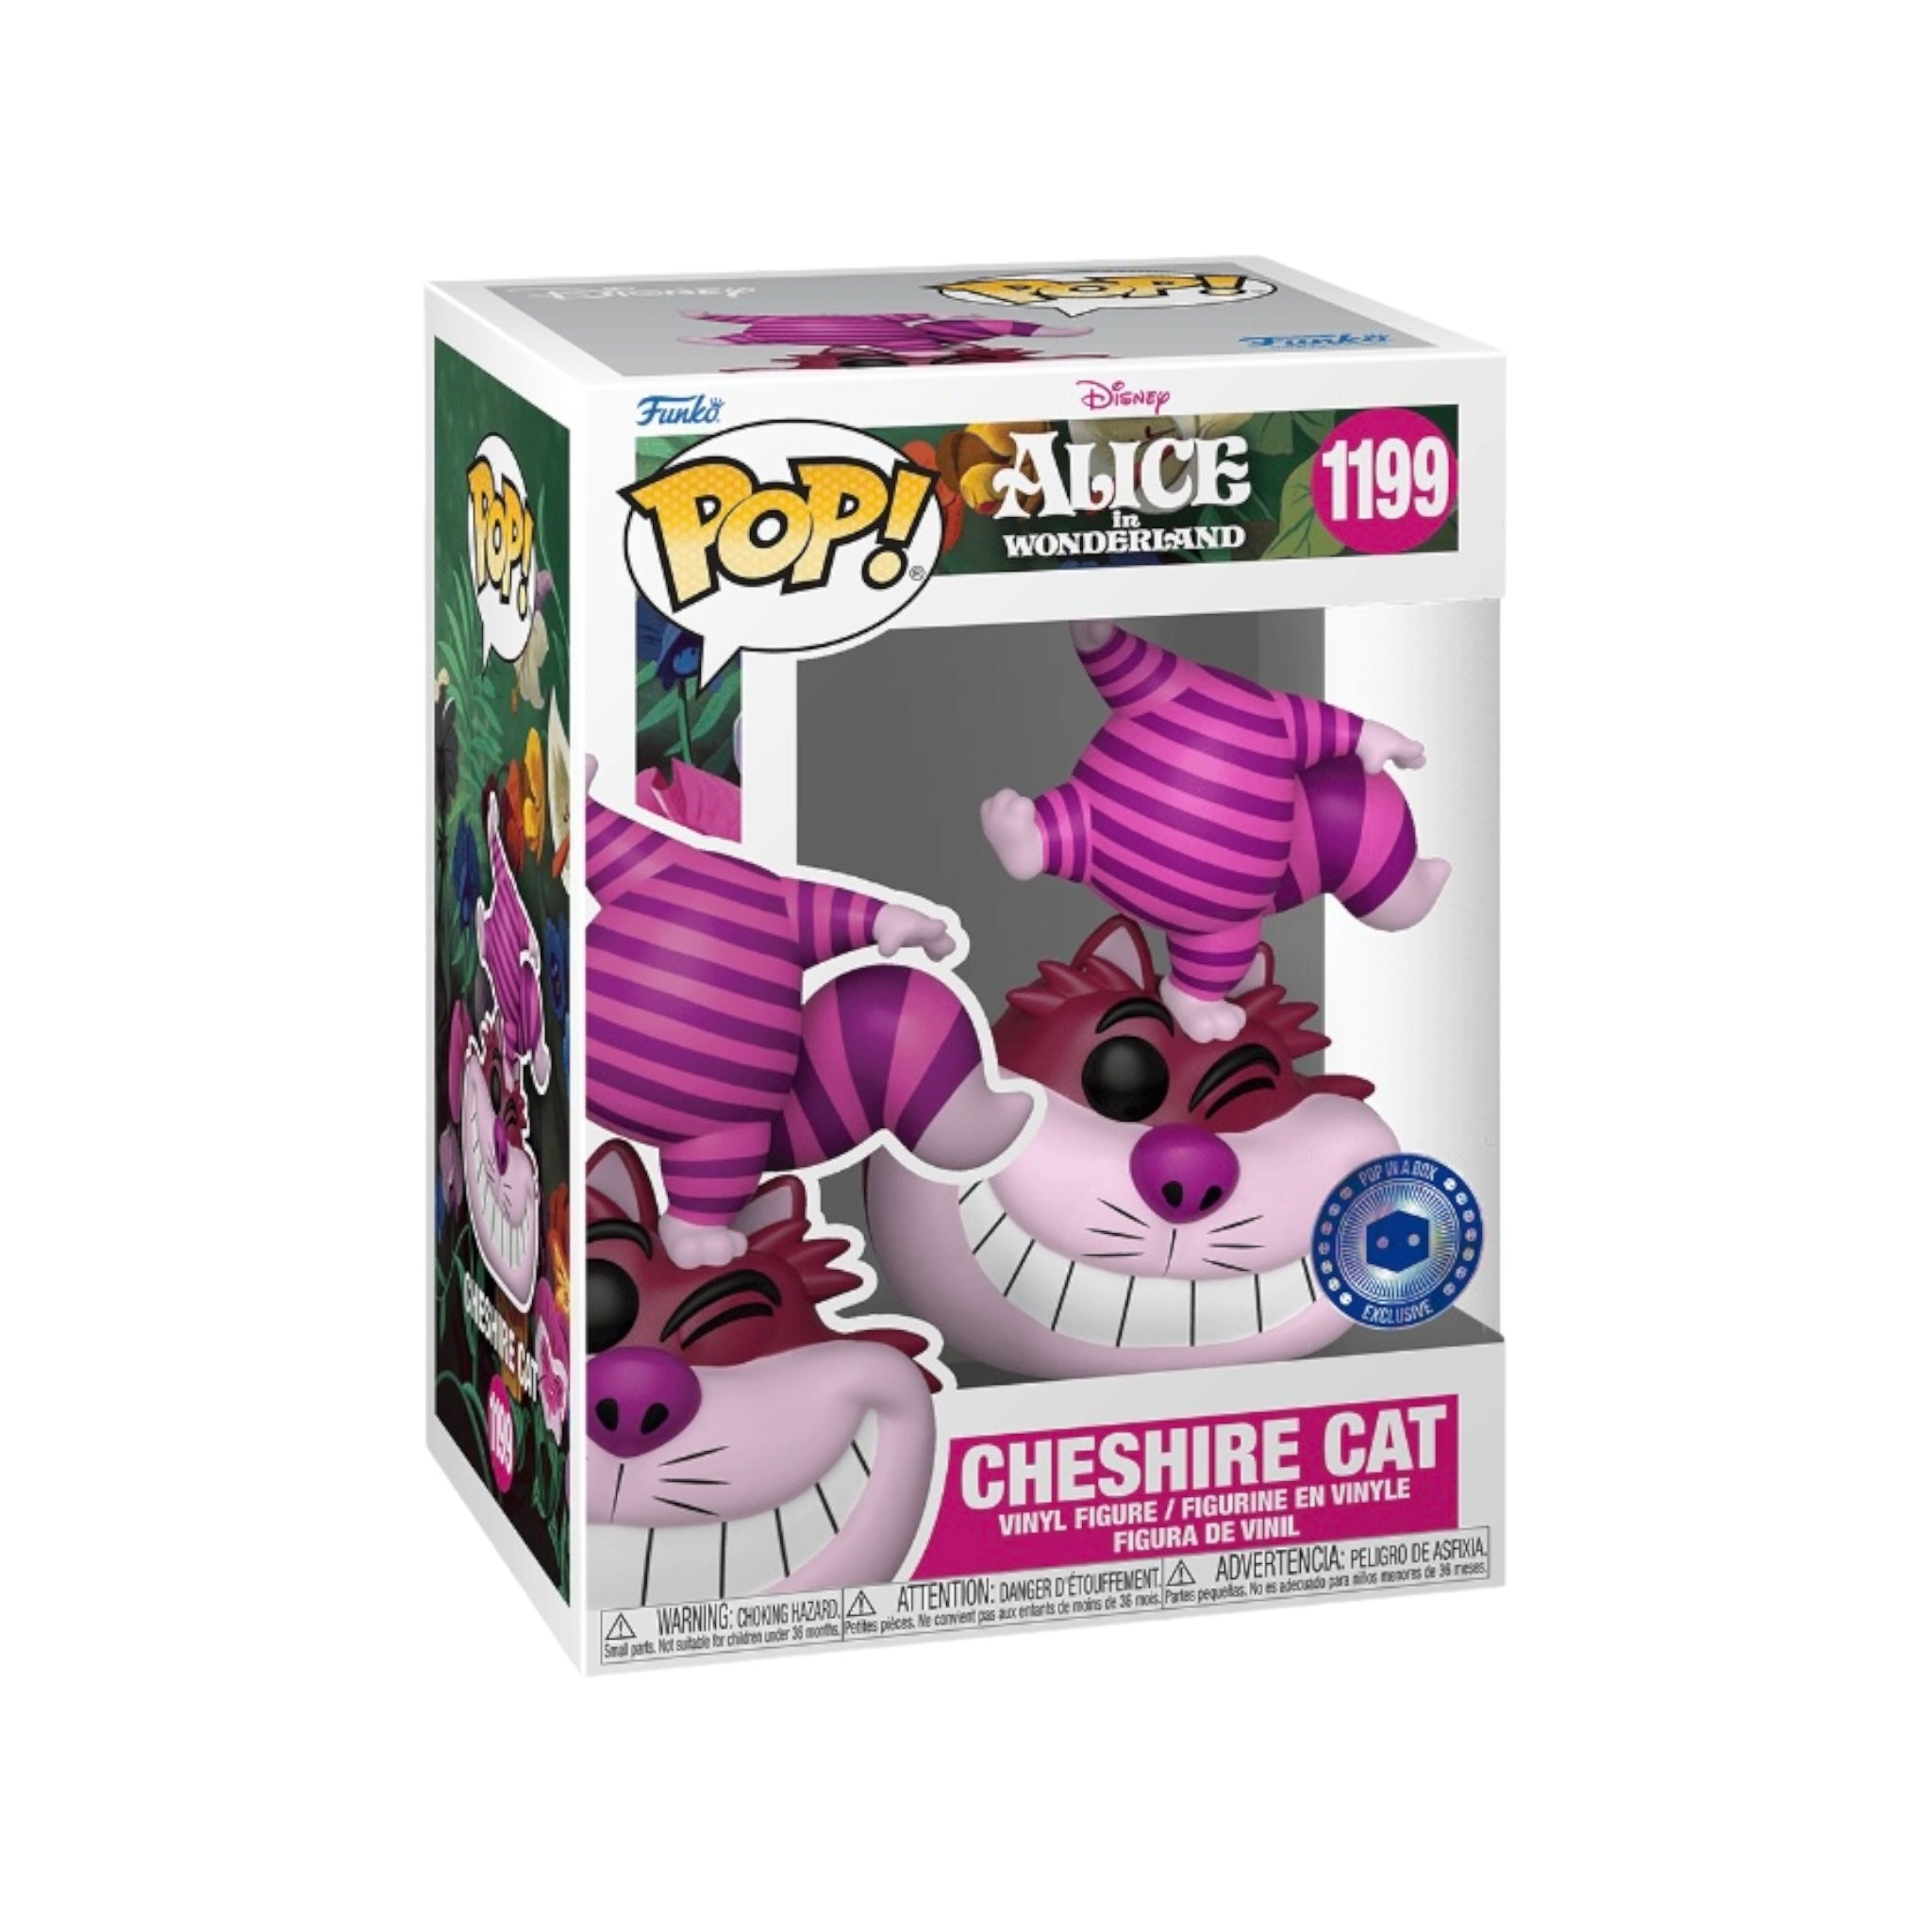 Cheshire Cat #1199 (Standing on Head) Funko Pop! - Alice in Wonderland - Pop In A Box Exclusive